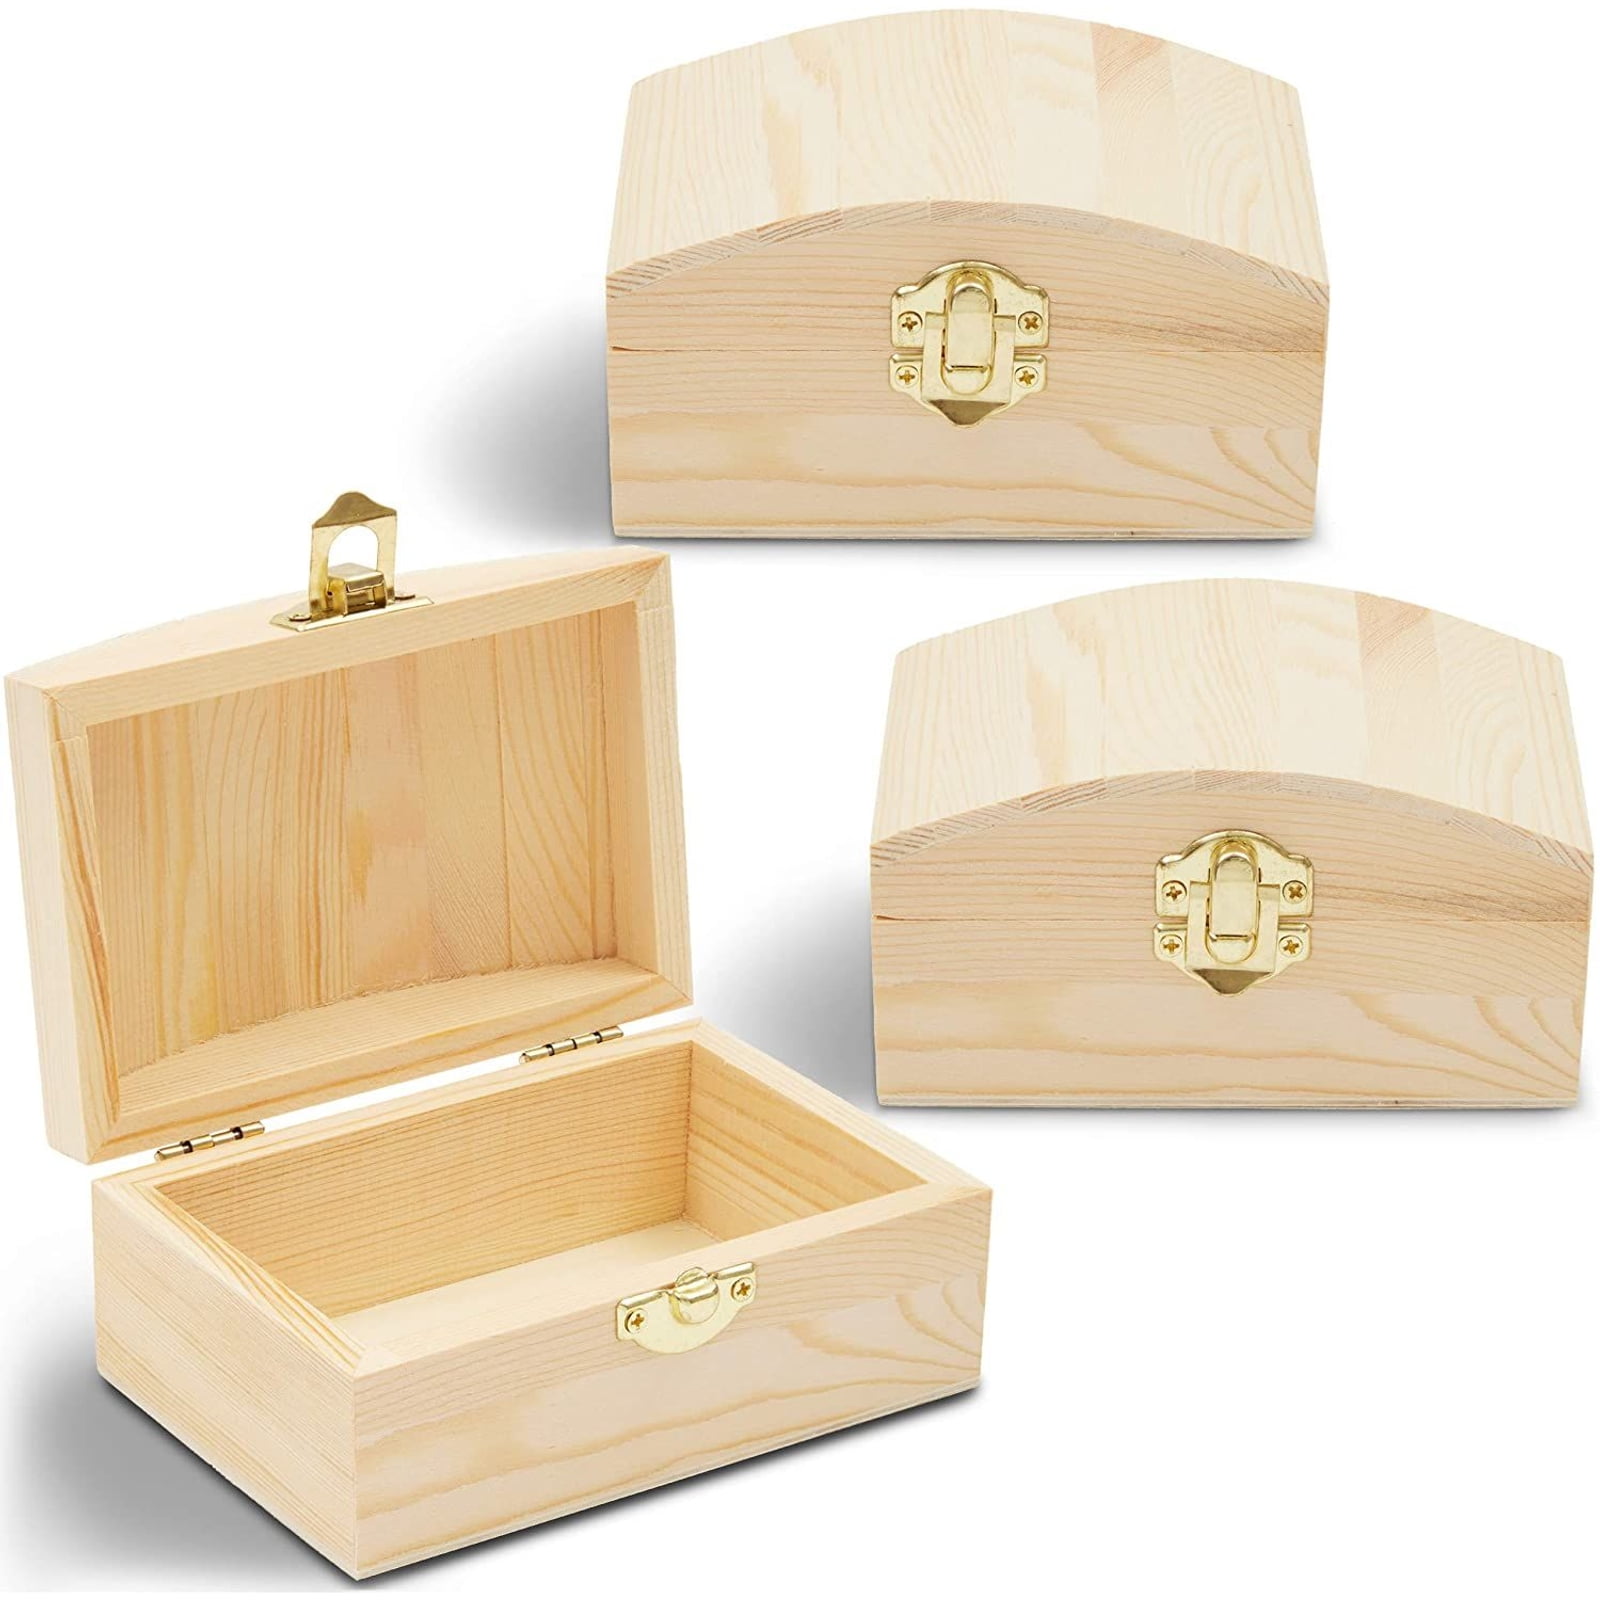 Unpainted Pine Wood Storage Box DIY Medium size 40 x 28 x 15 cm Wooden Crate 